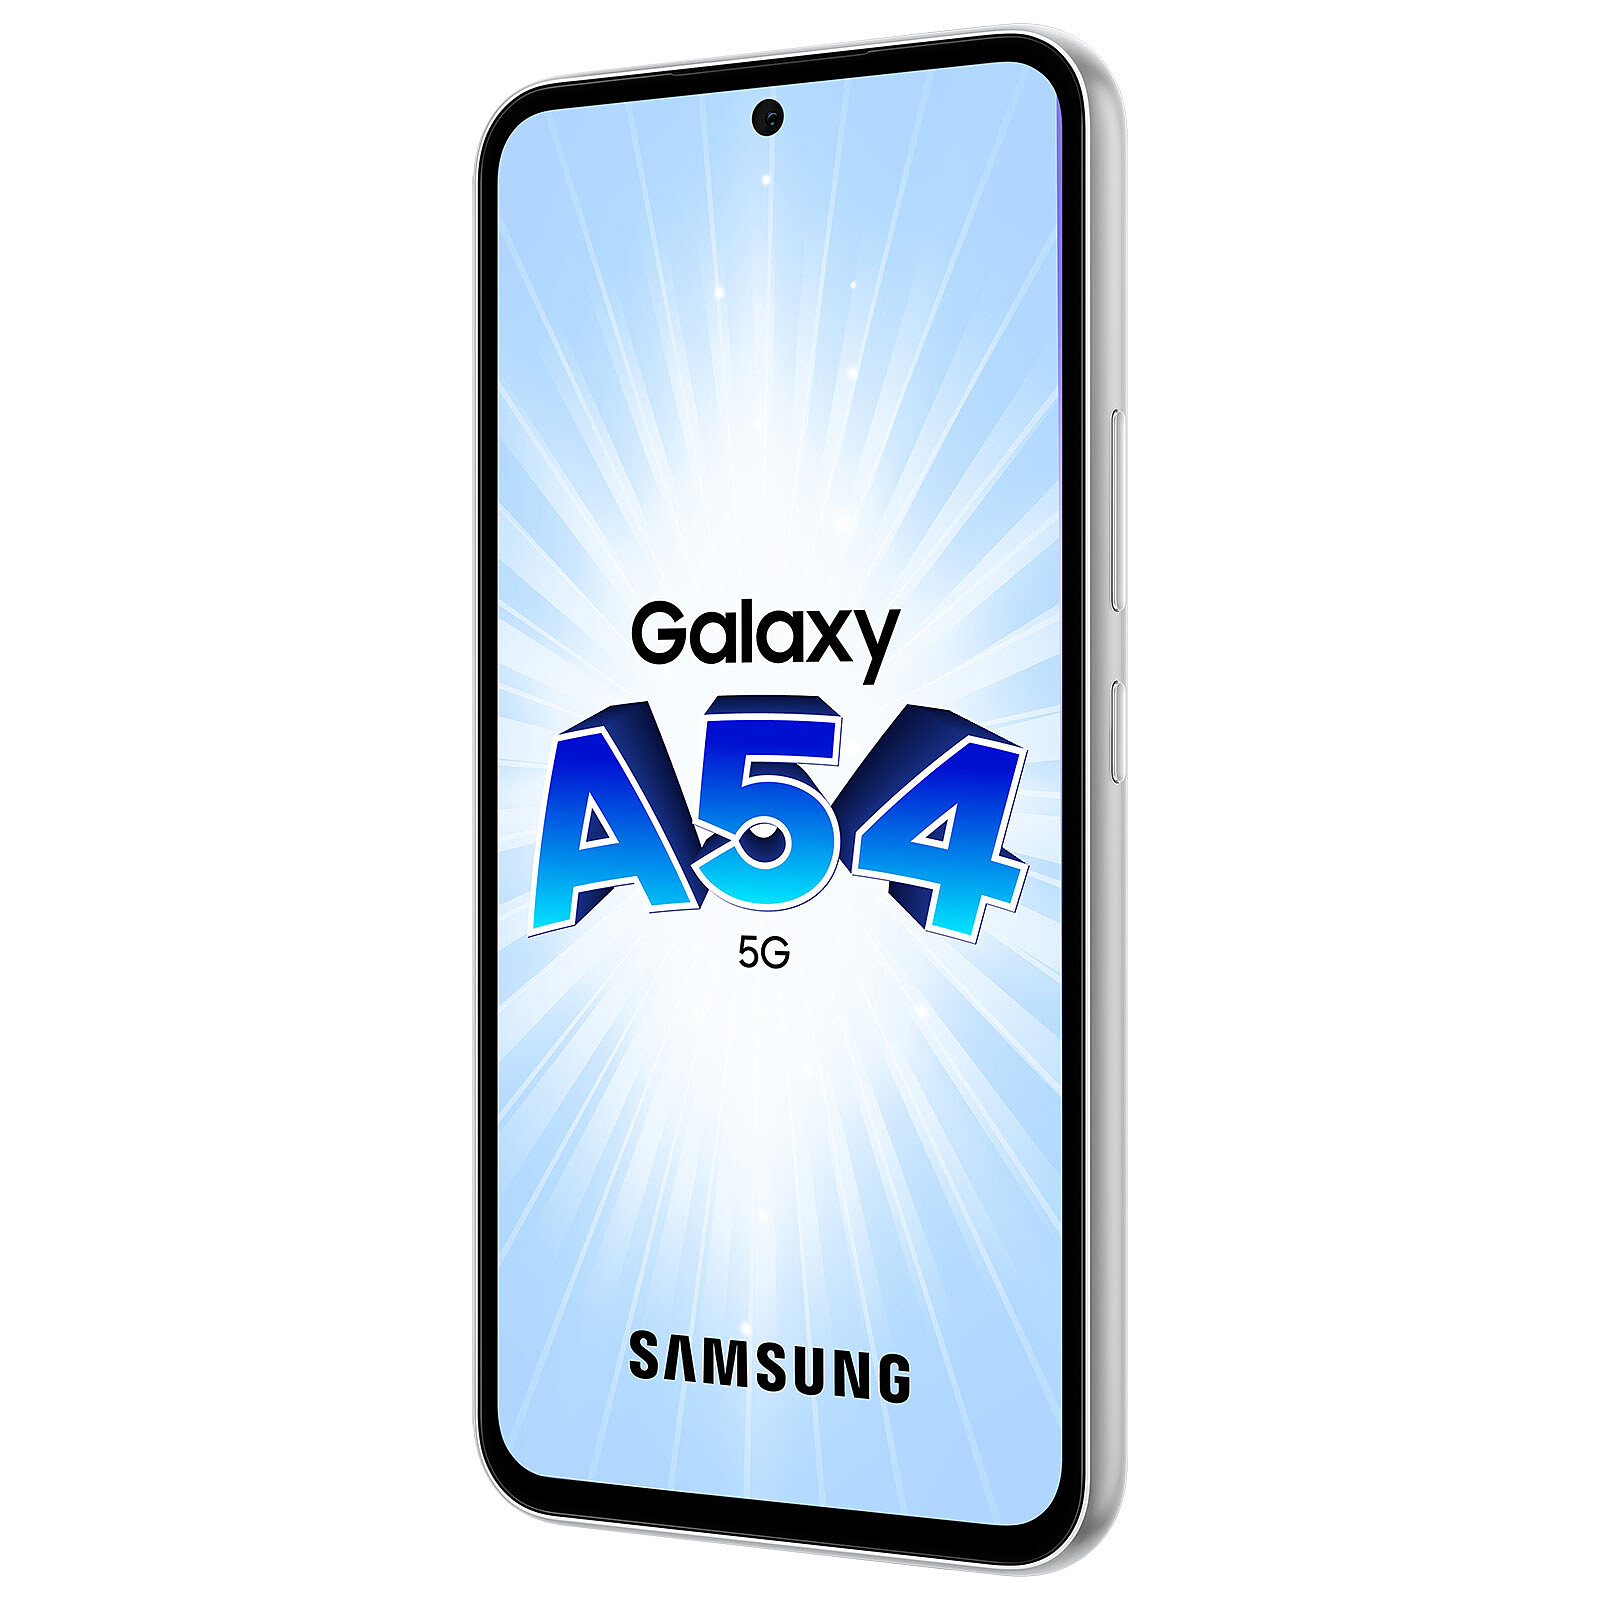  SAMSUNG Galaxy A54 5G SM-A546B/DS Dual Hybrid SIM Exyonos 1380  Android Smartphone, 6.4 Inch Dynamic AMOLED Display, 5000 mAh Battery,  256GB/8 GB EU/UK Model International Version (Black) : Cell Phones 